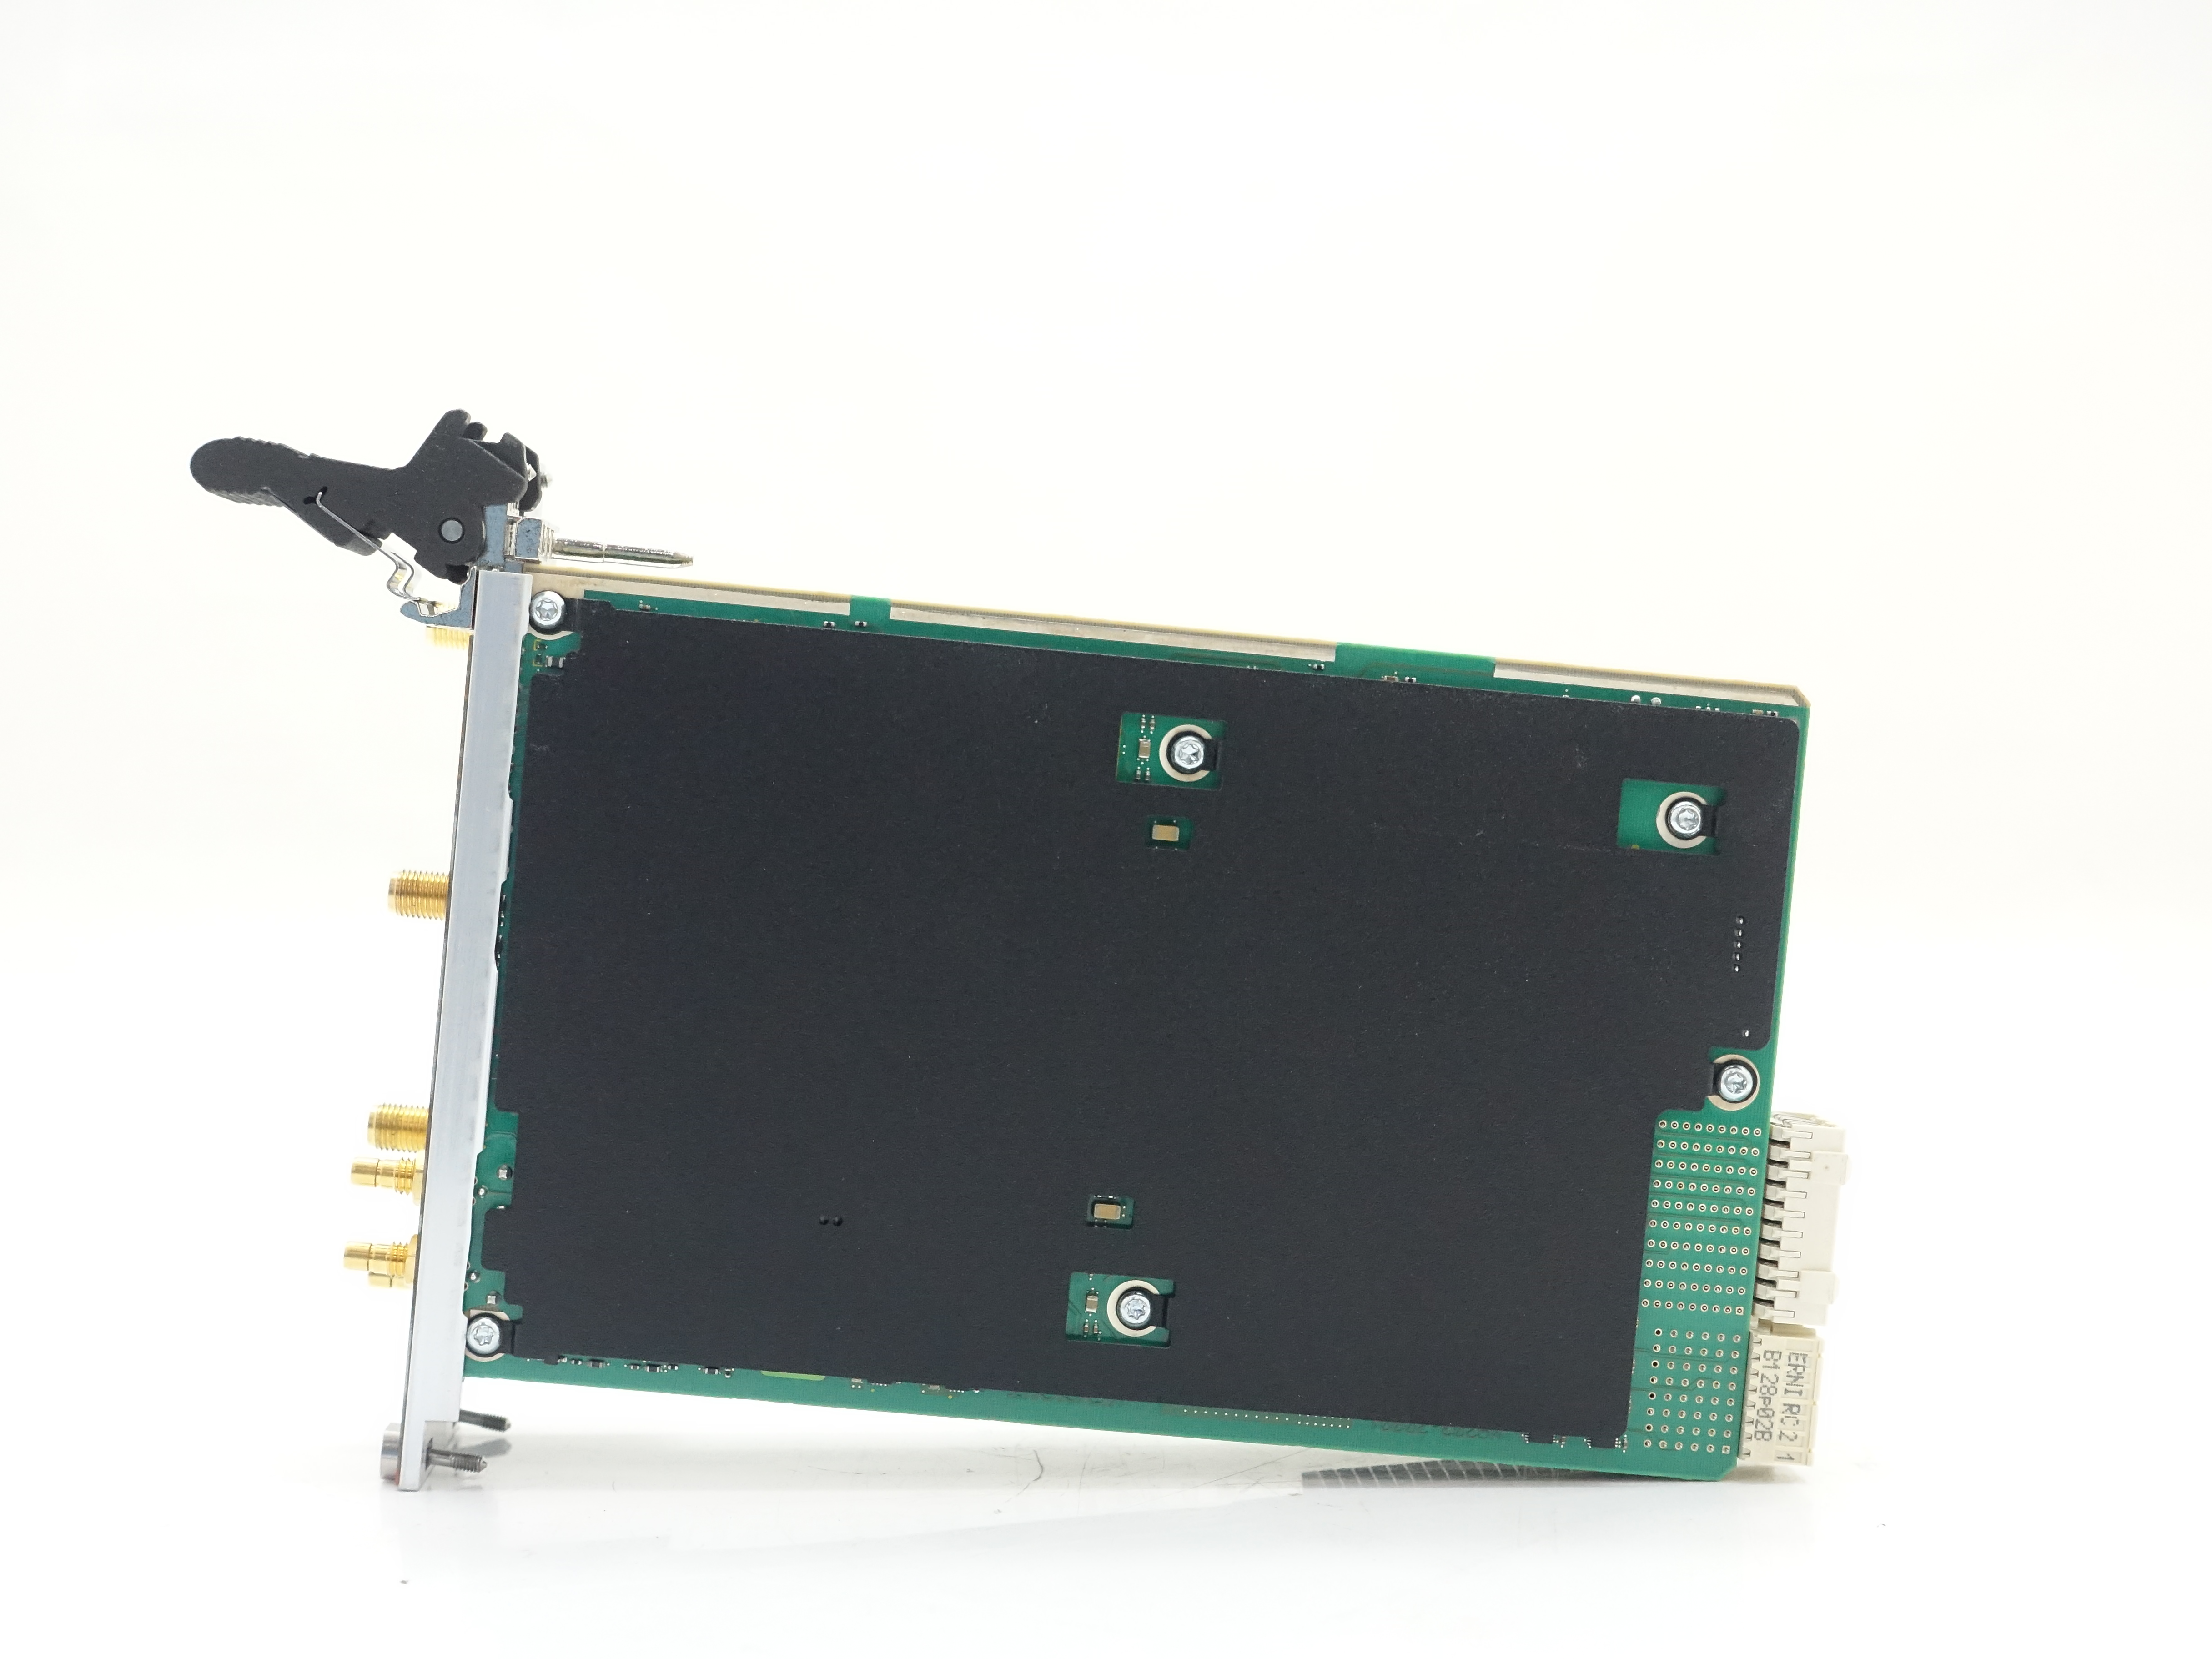 Keysight M9203A PXIe High-Speed Digitizer/Wideband Digital Receiver / 12-bit / 3.2 GS/s / FPGA Signal Processing